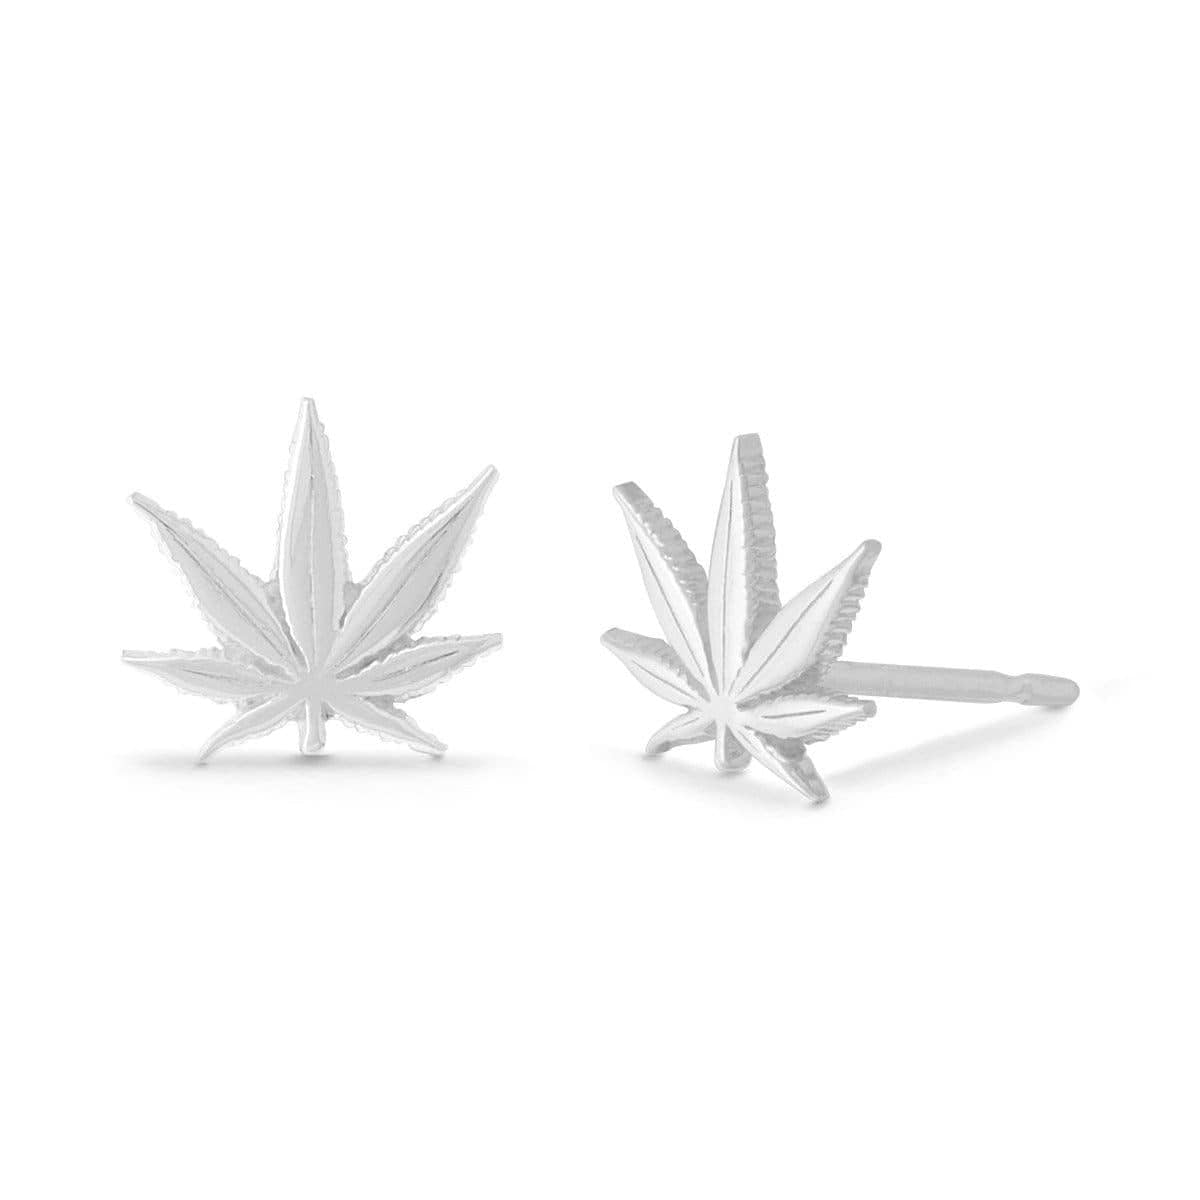 Boma Jewelry Earrings Marijuana Leaf Stud Earrings